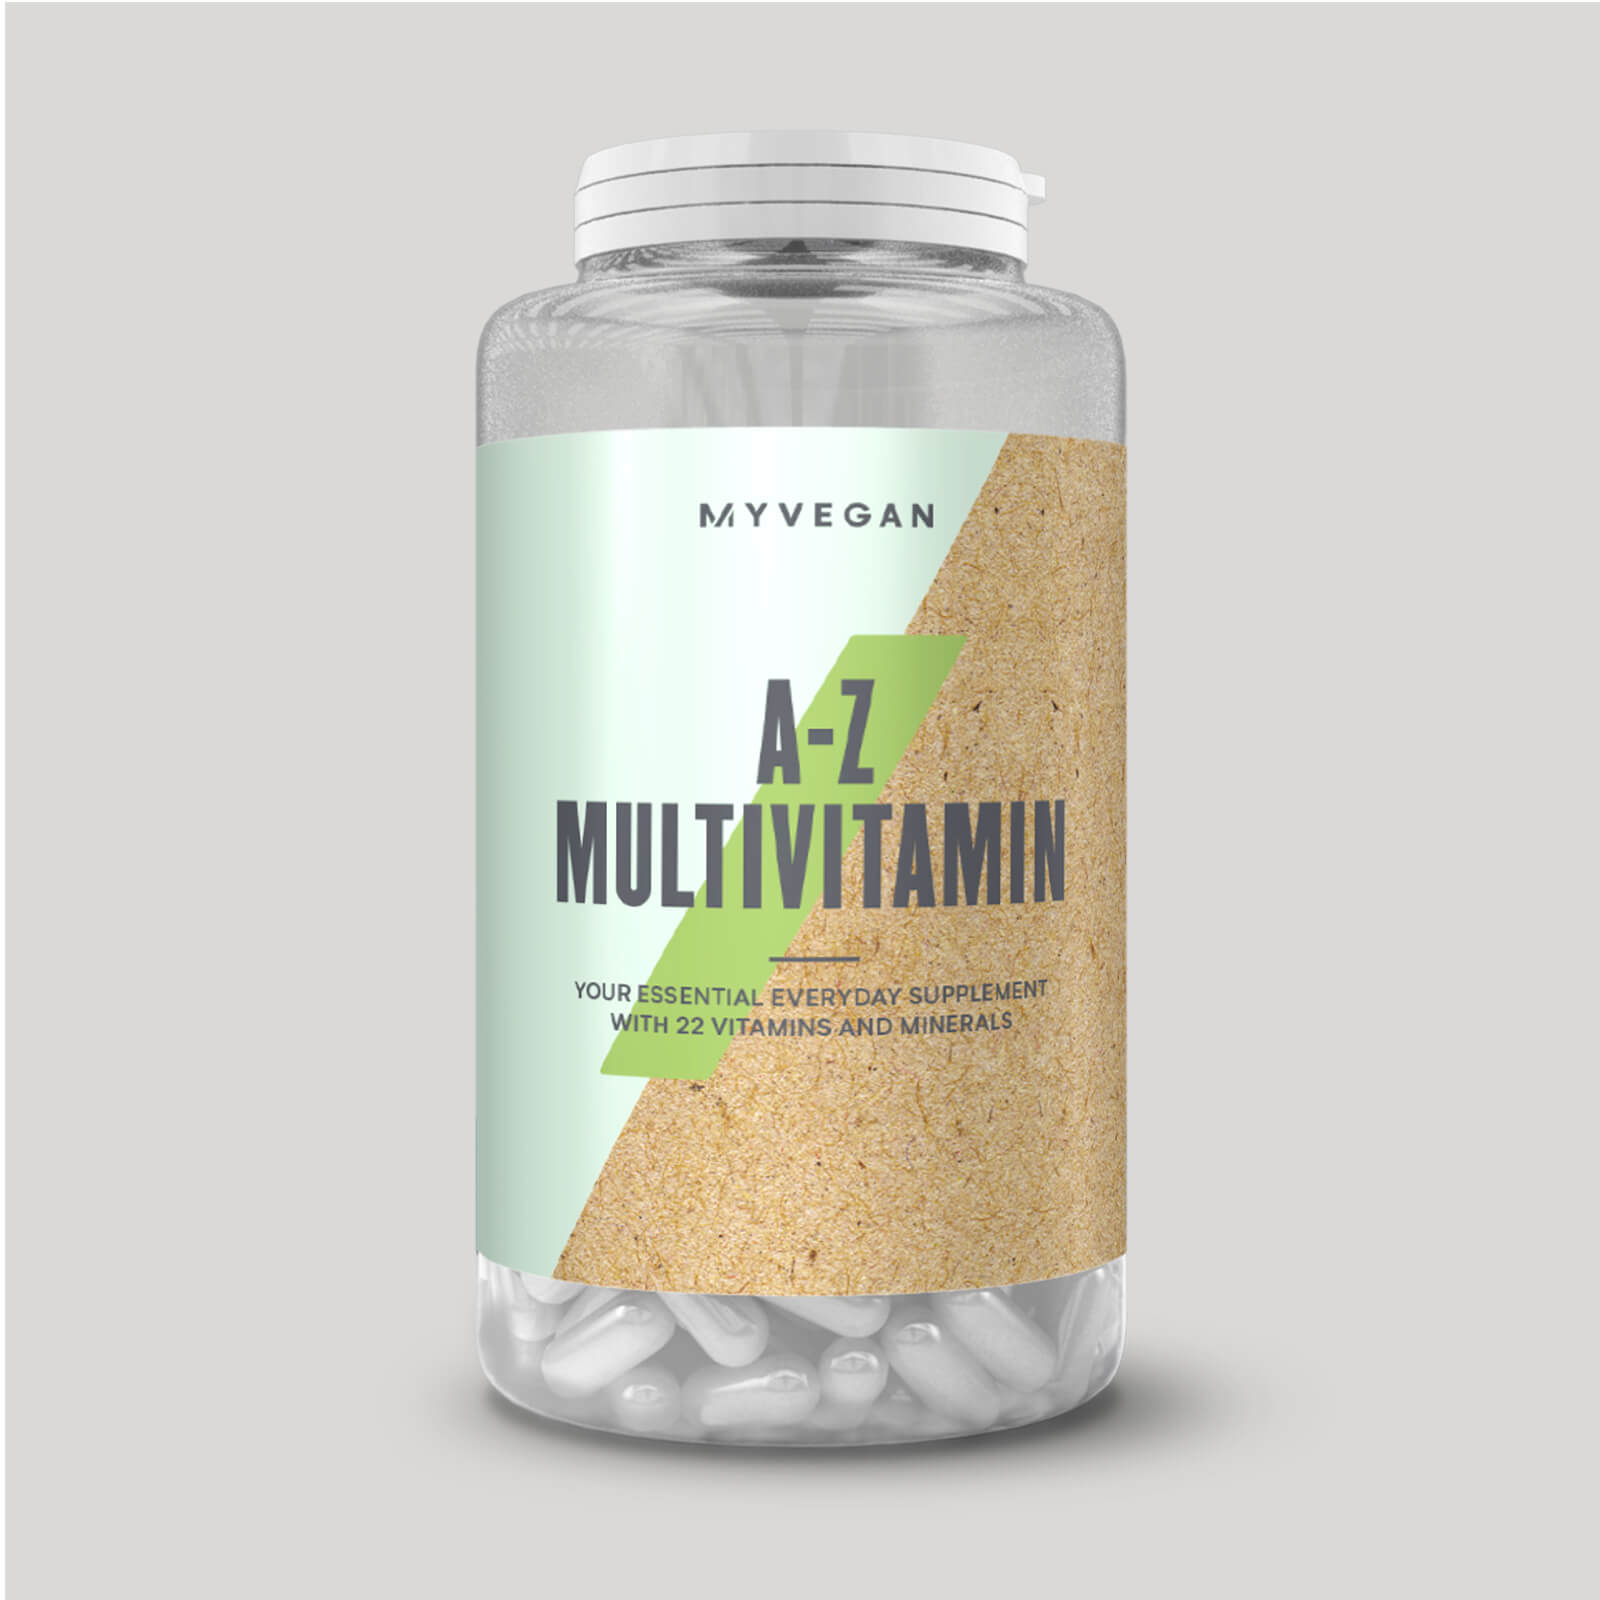 Myprotein Vegan a-z multivitamin capsules - 180capsules - unflavoured